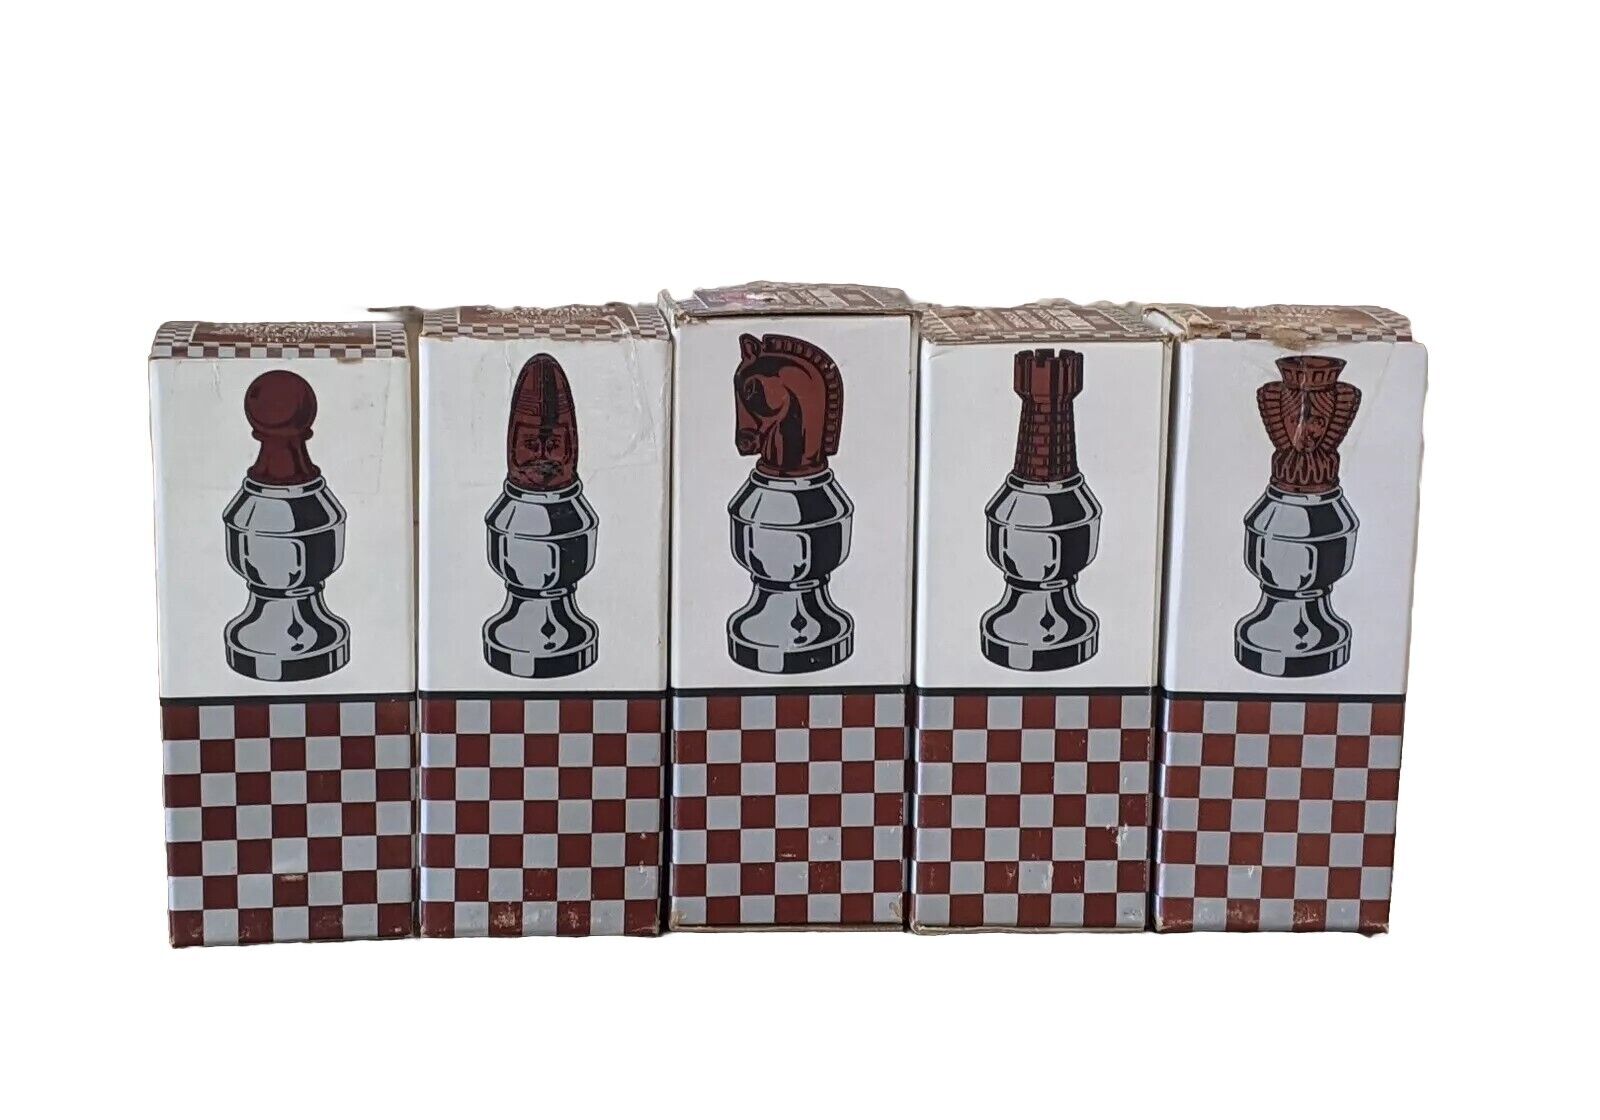 Vintage Avon After Shave Chess Piece Bottles (Filled) - Set of 5